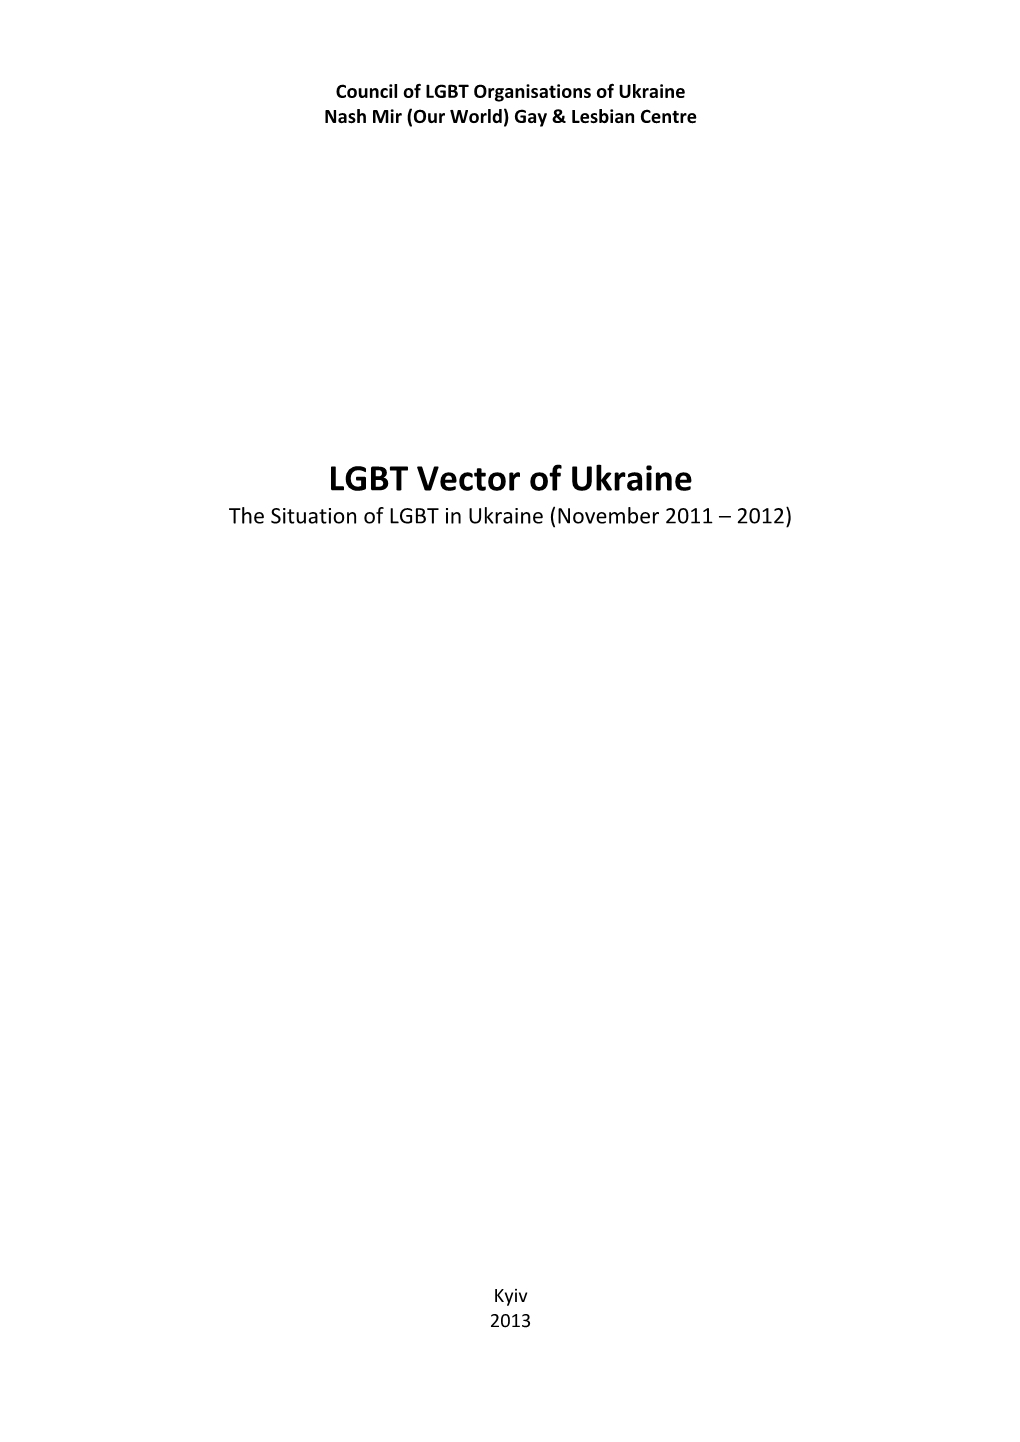 LGBT Vector of Ukraine the Situation of LGBT in Ukraine (November 2011 – 2012)